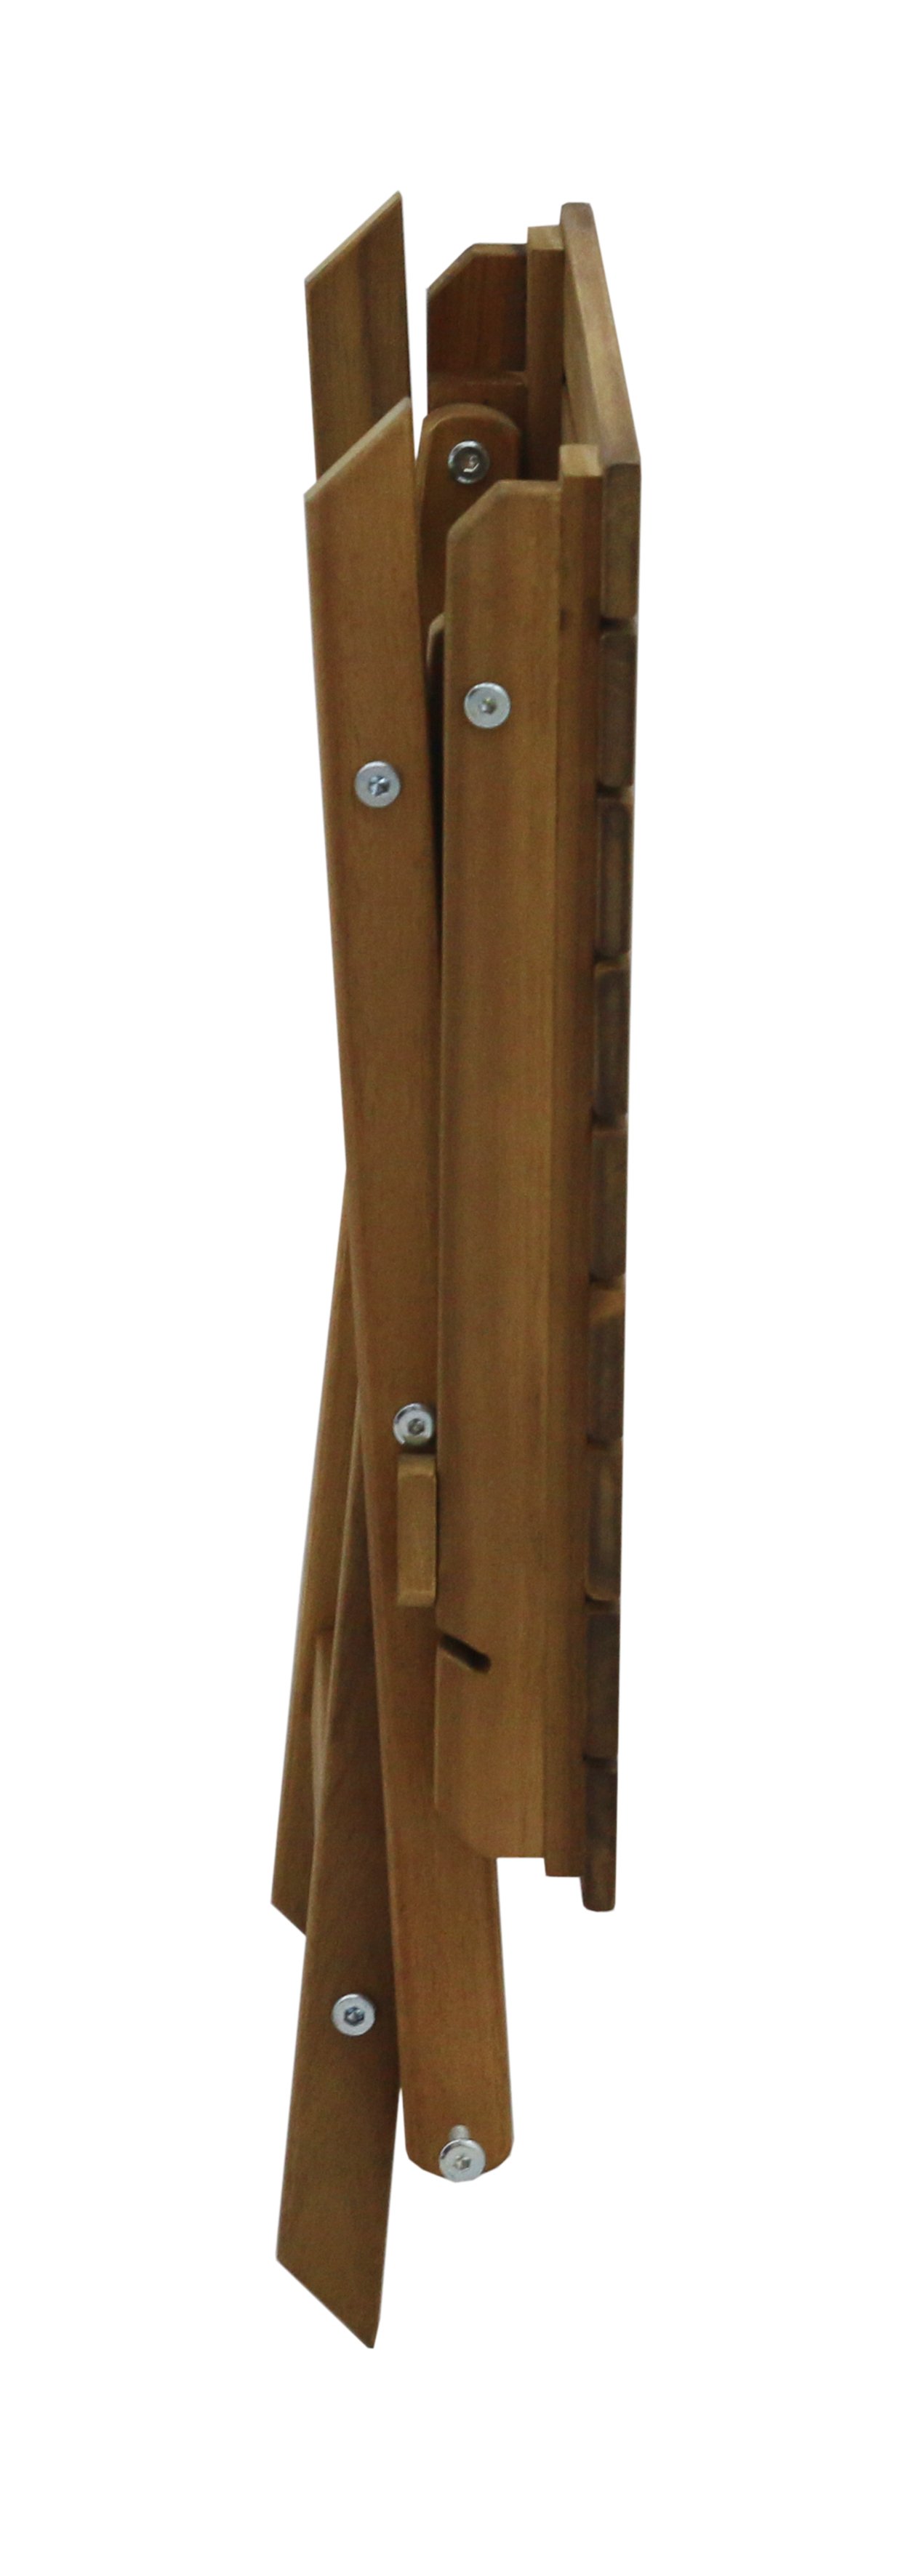 Medinis stalas 40 x 40 x 40 cm - 6